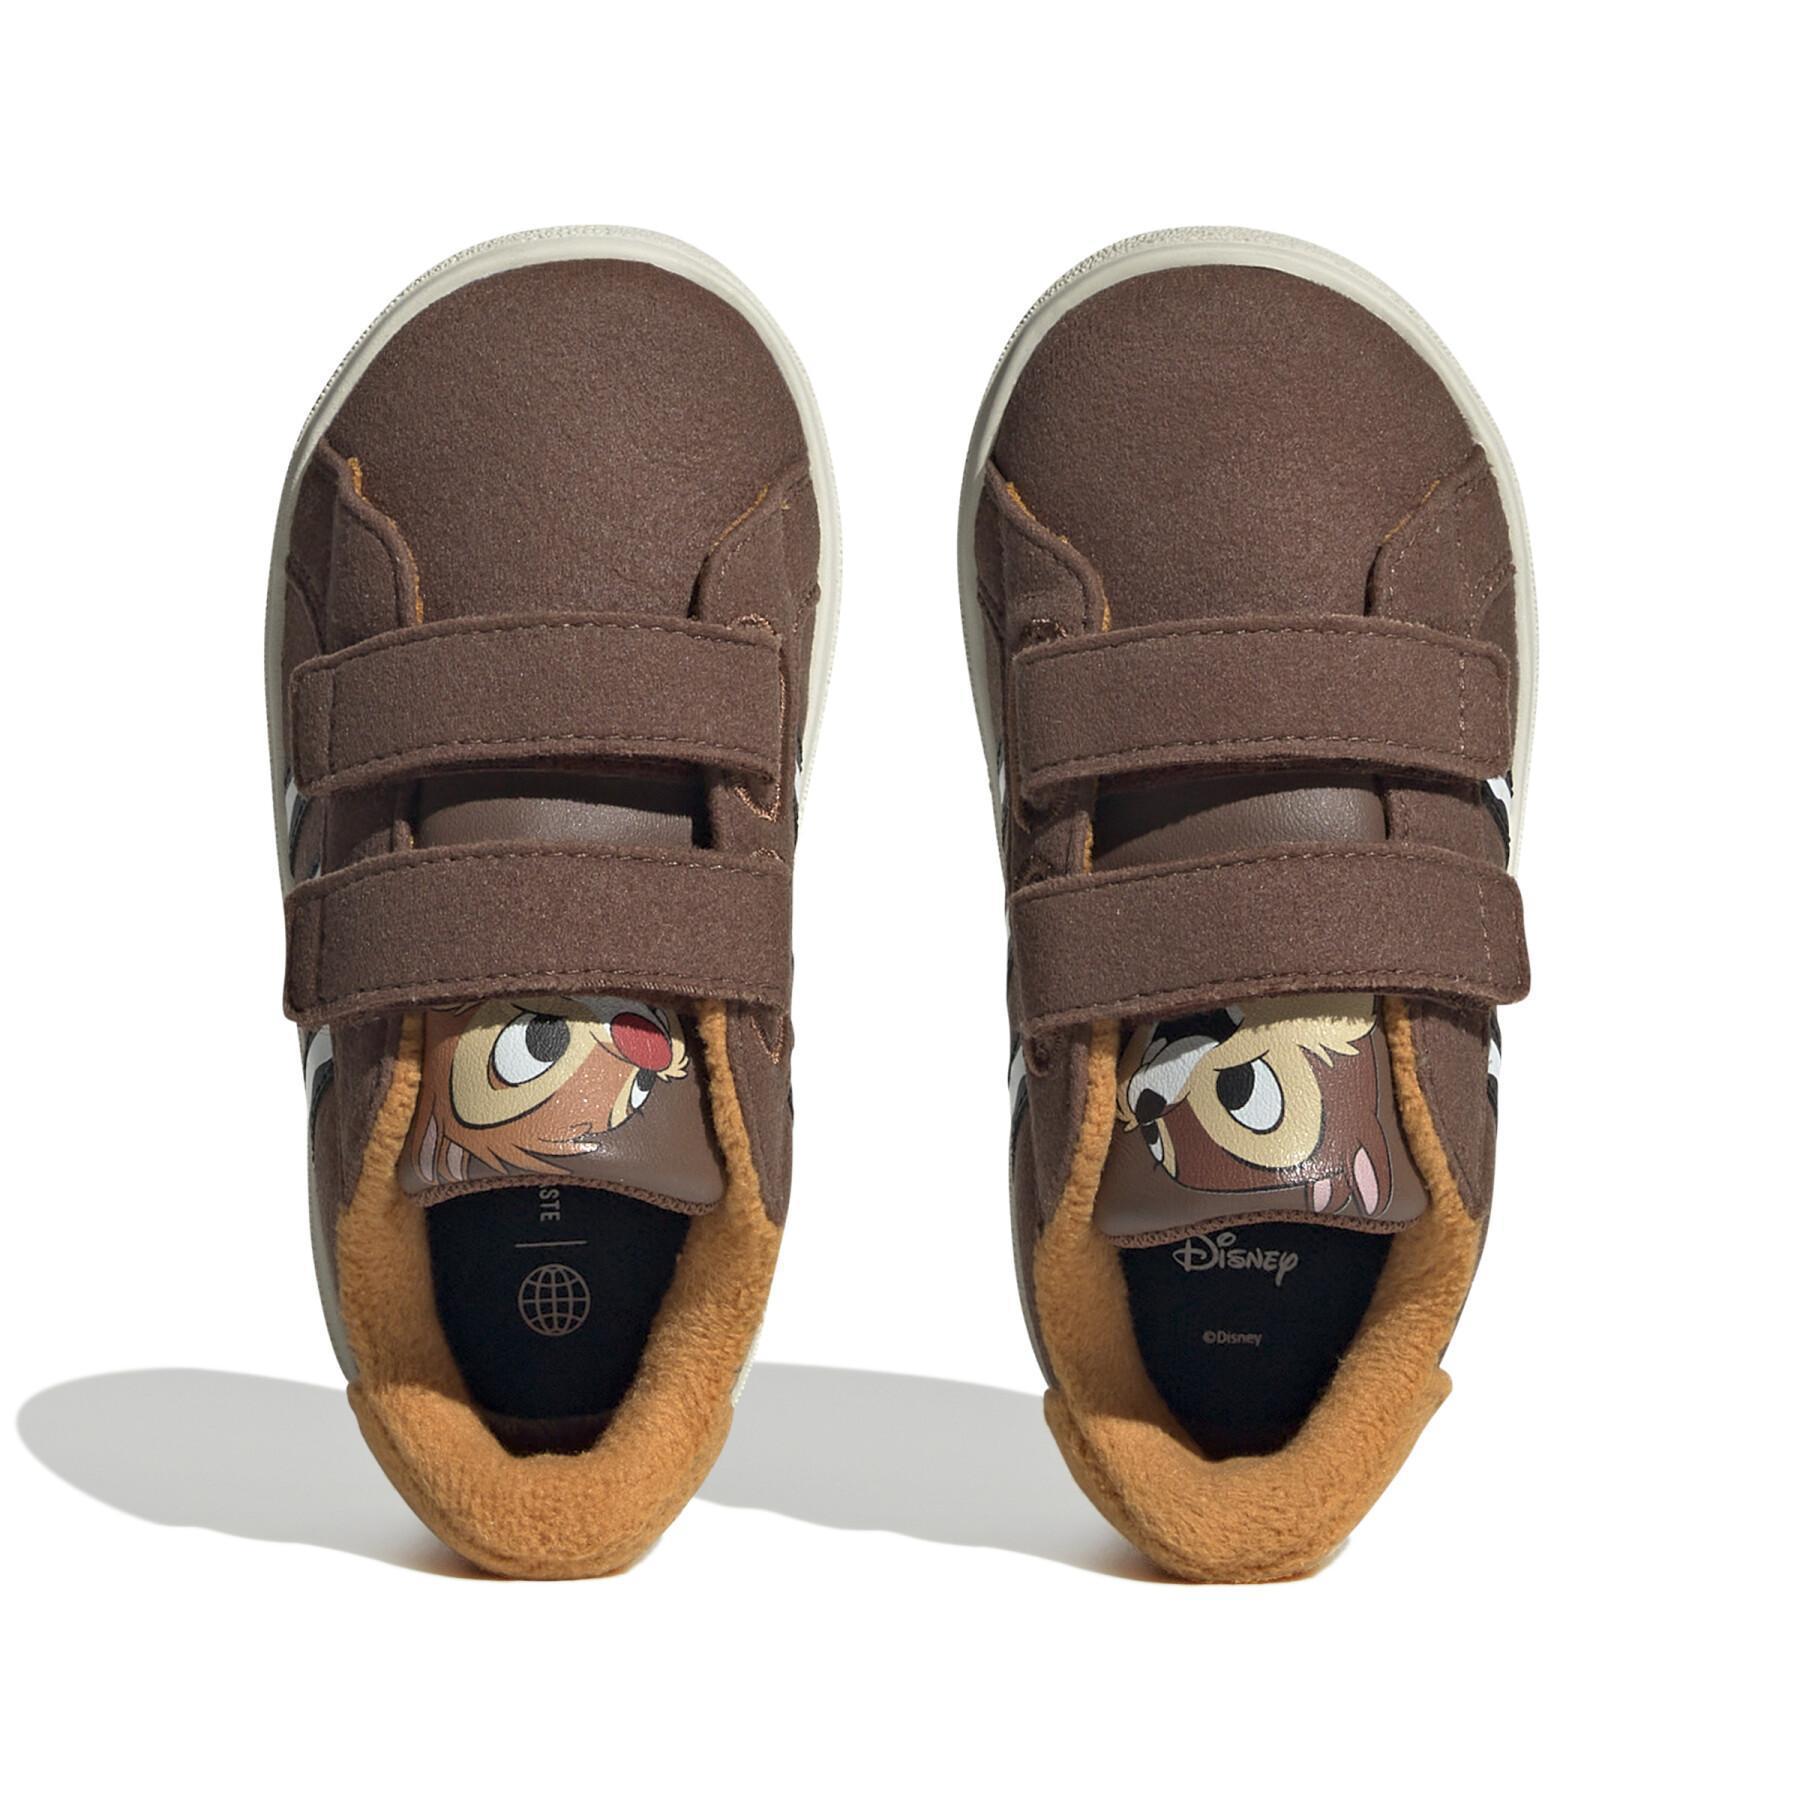 Baby sneakers adidas Grand Court x Disney Tamias